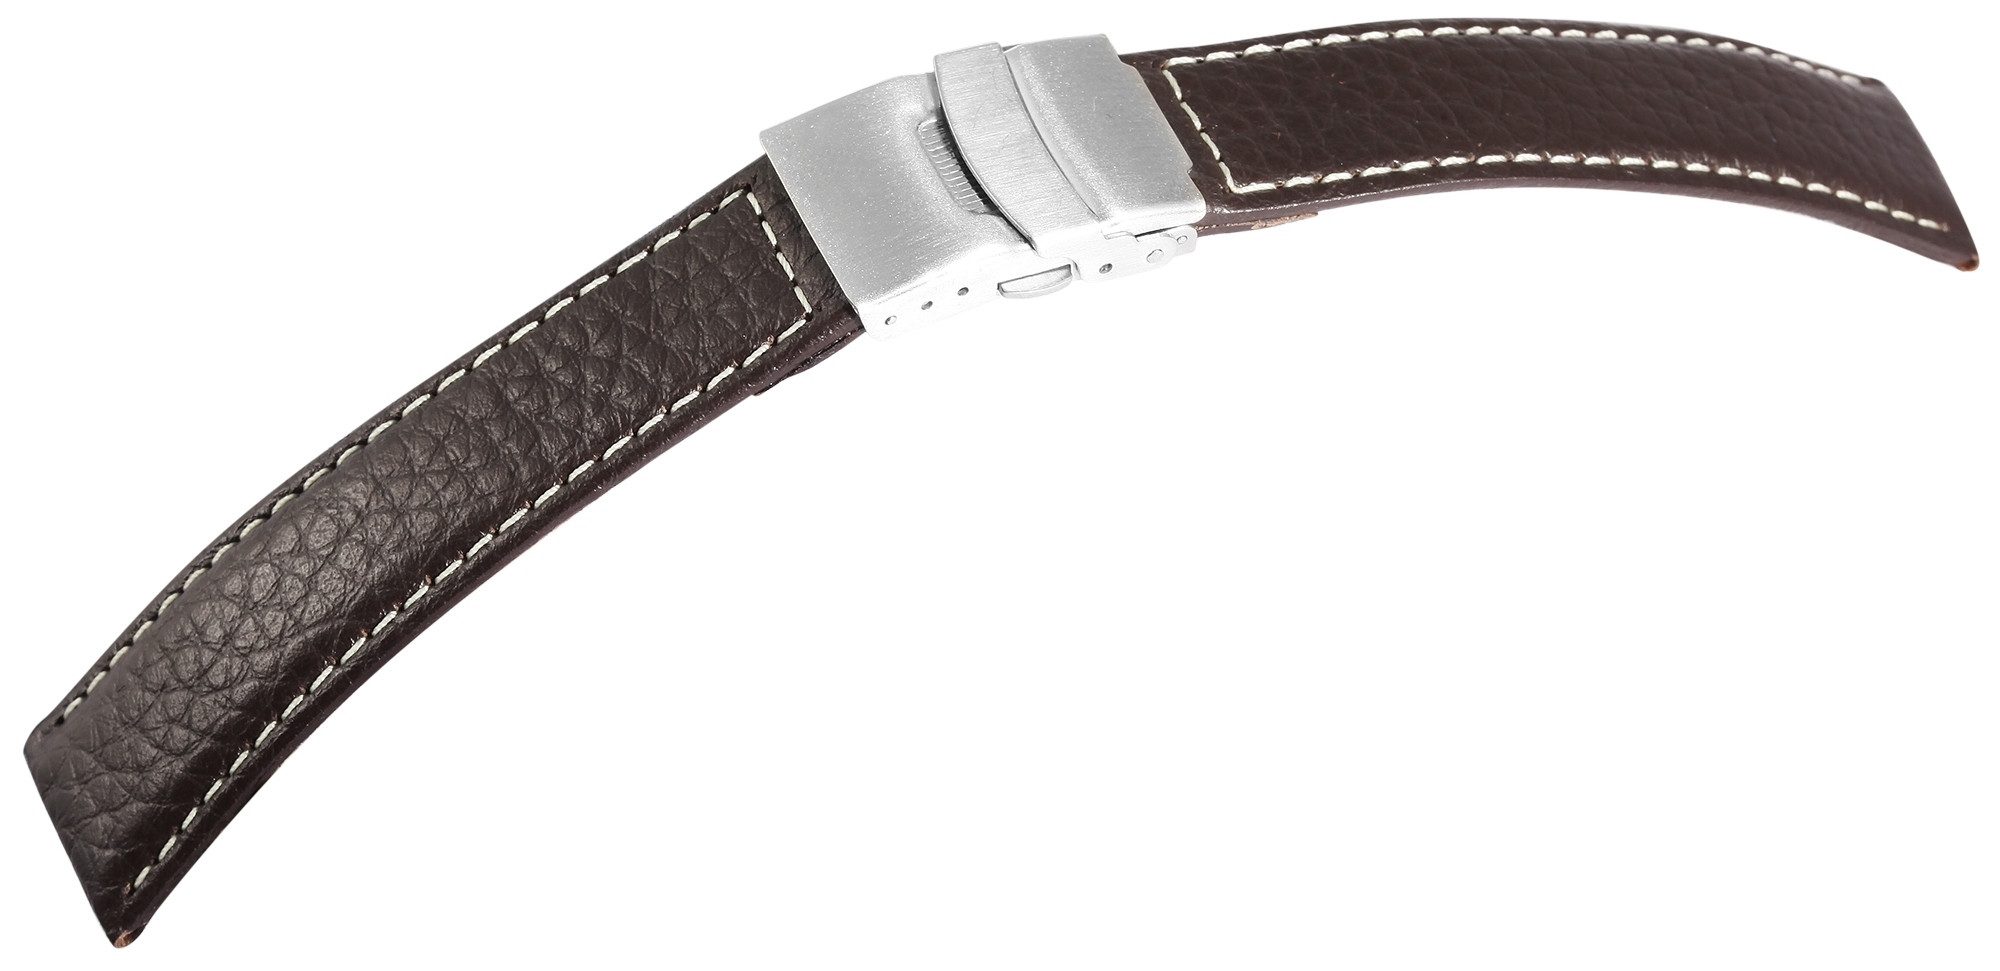 Steinmeister Uhrenarmband LB0065 Echtleder Uhrenarmband braun weiße Naht 18 - 22mm, Herren ErsatzArmband